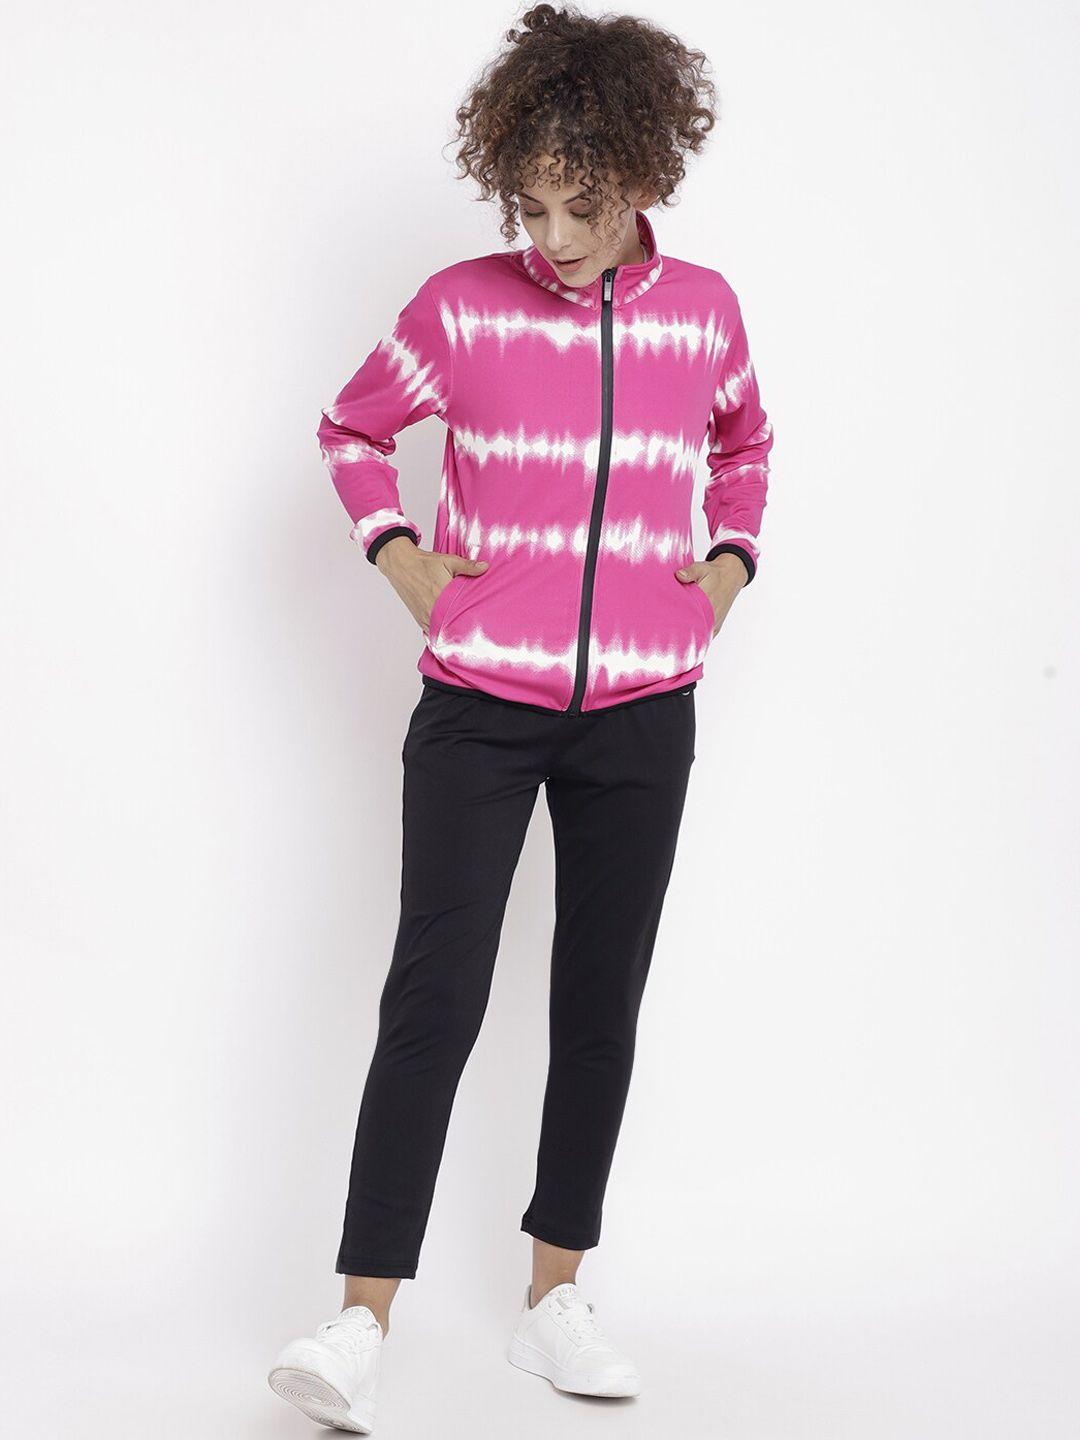 chkokko women pink & black printed track suit